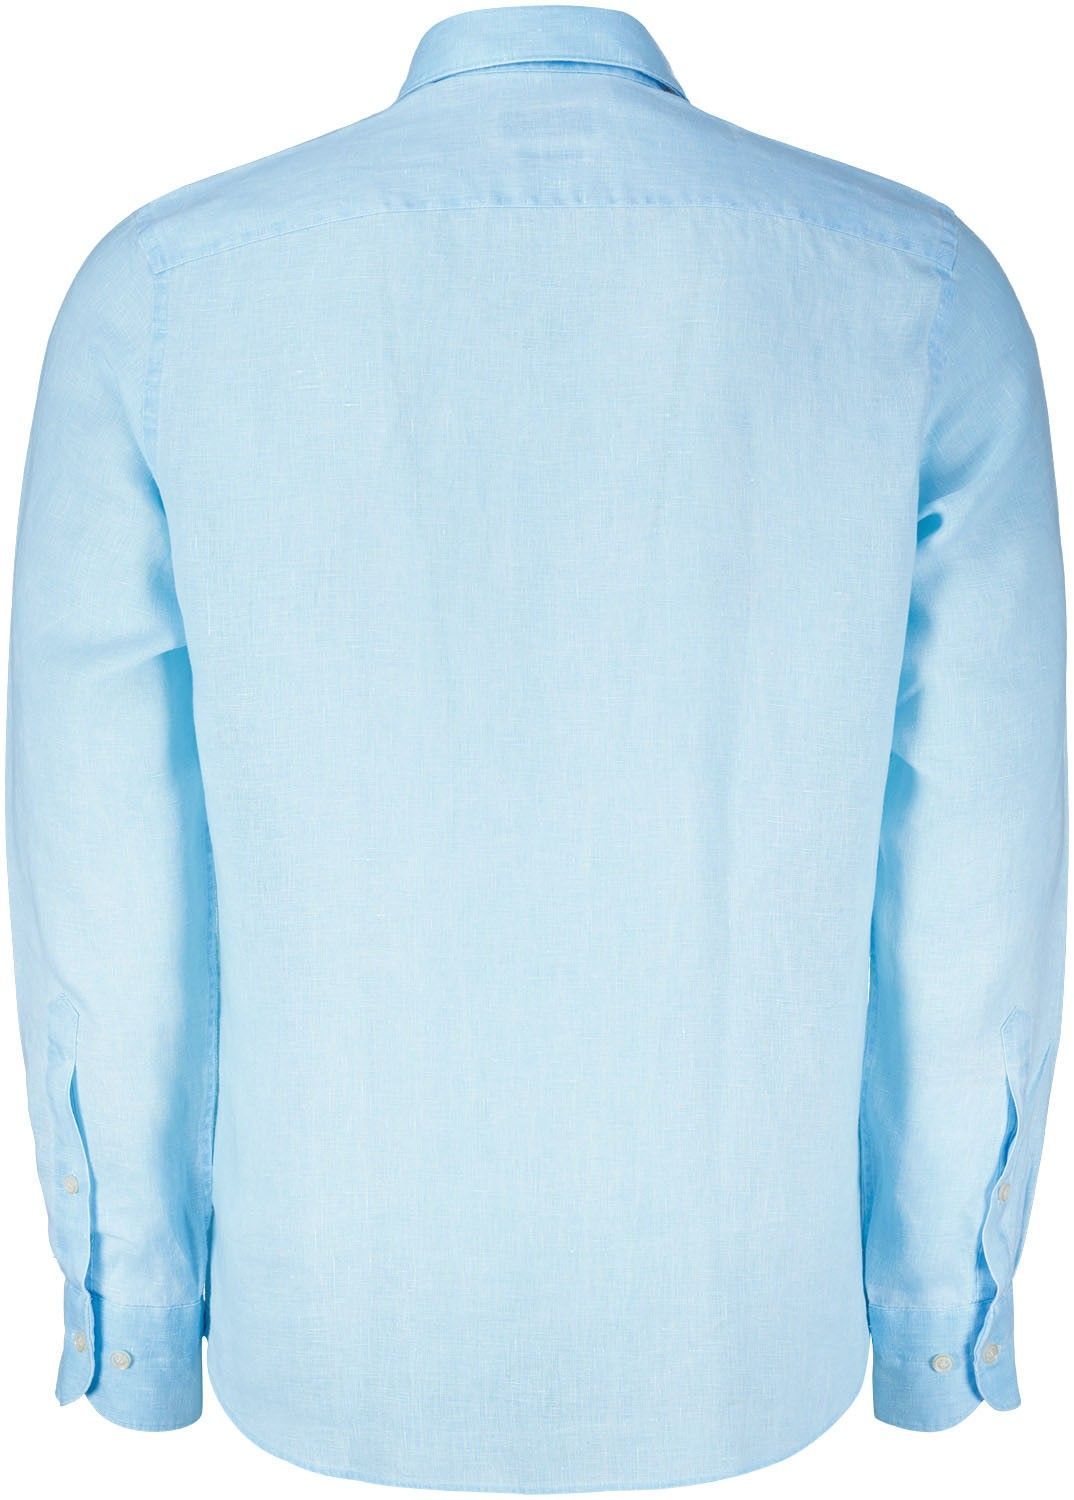 Profuomo Overhemd Lichtblauw 